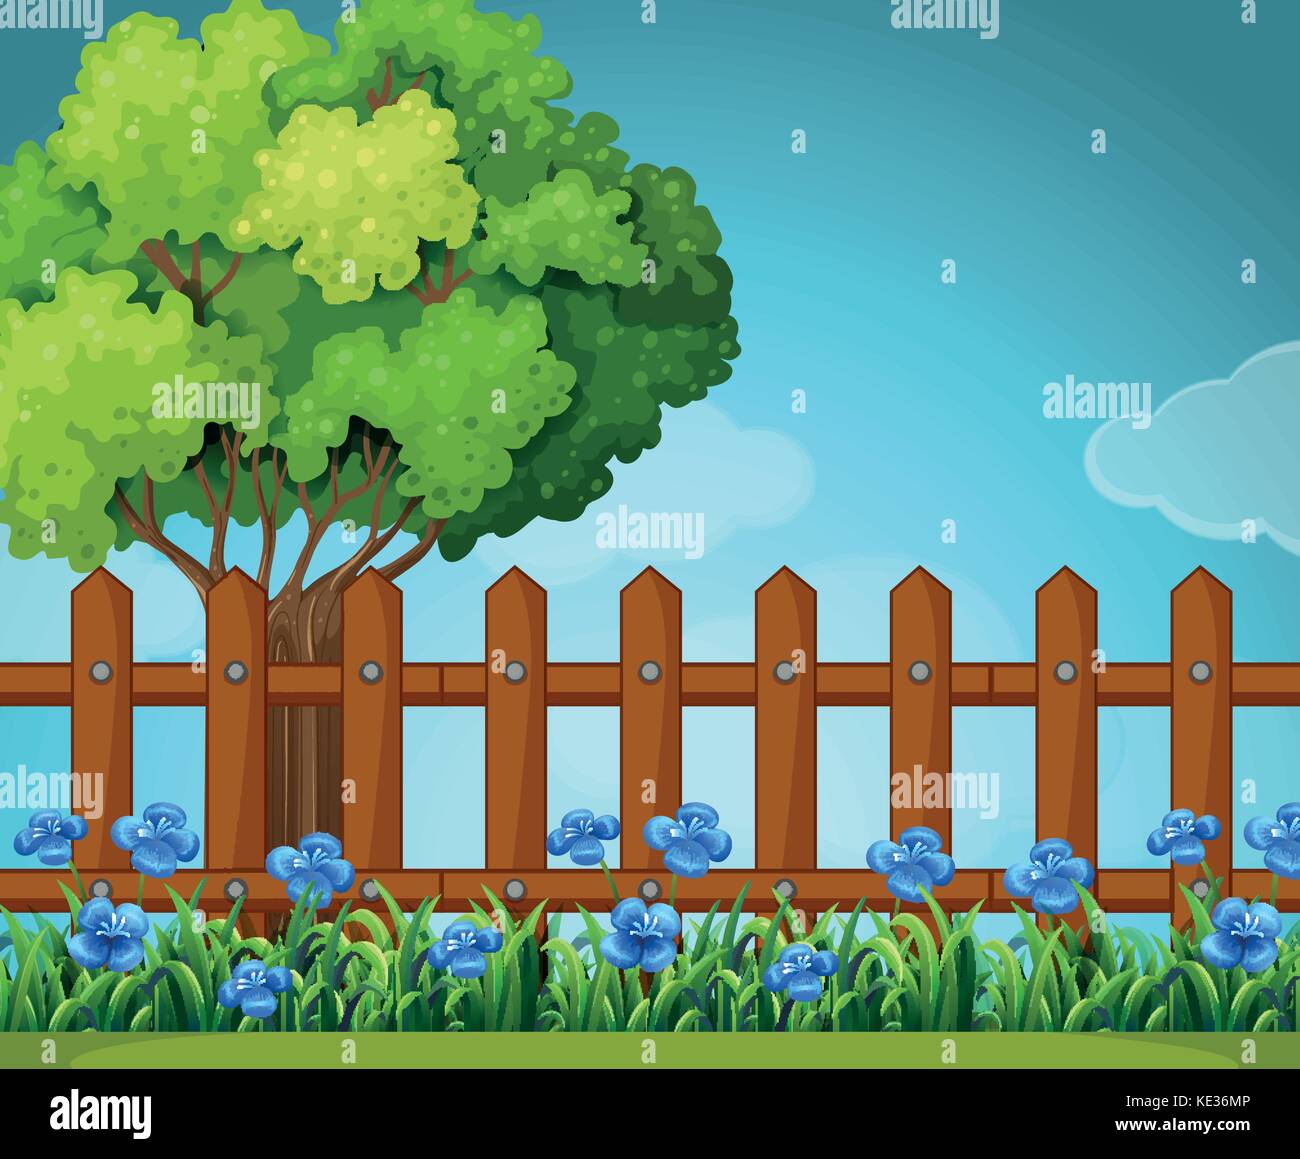 Scene with wooden fence in garden illustration Stock Vector